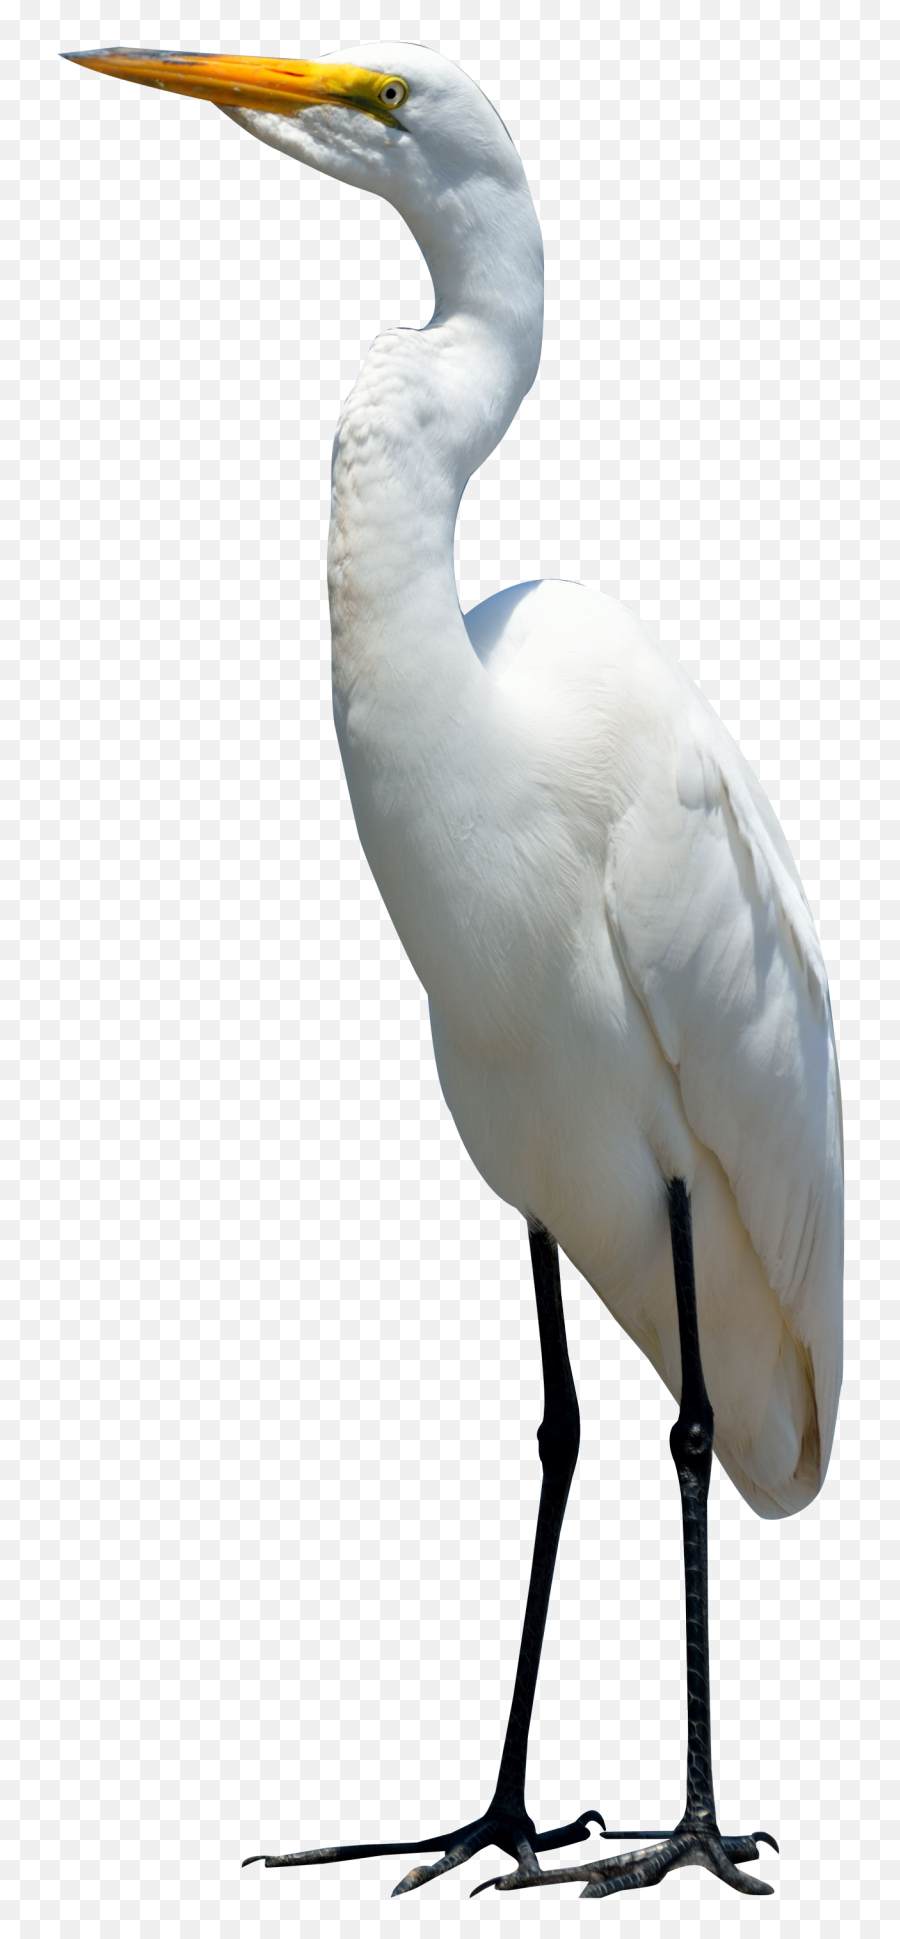 Egret Bird Png Image - Purepng Free Transparent Cc0 Png Crane Bird Transparent Background,Bird Flying Png